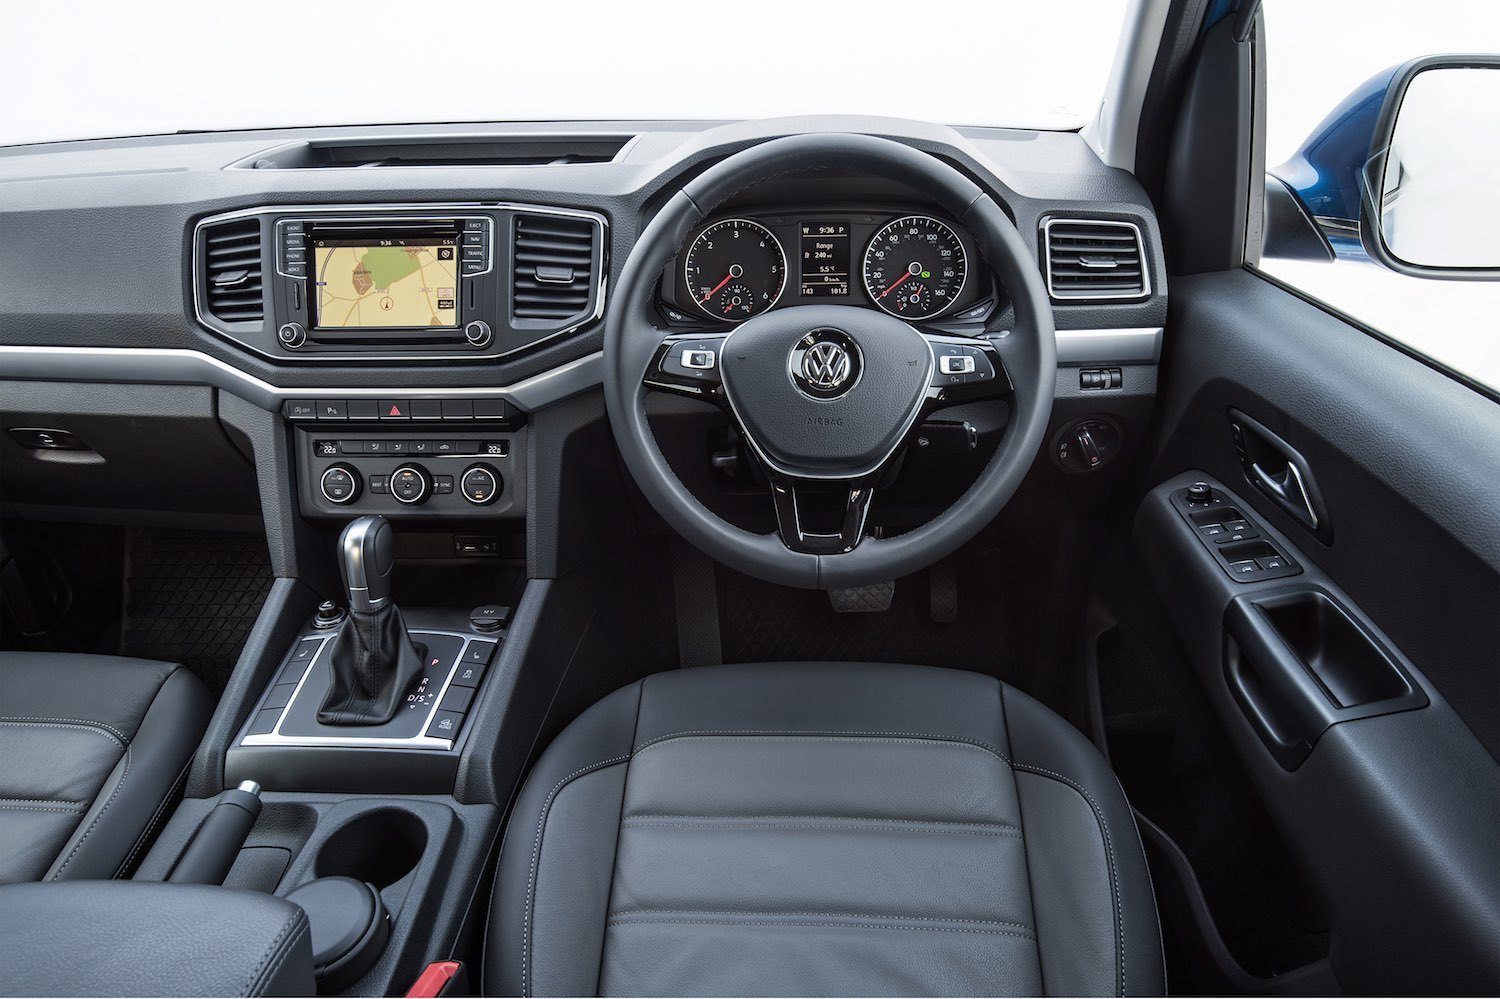 Neil Lyndon reviews the latest Volkswagen Amarok 6